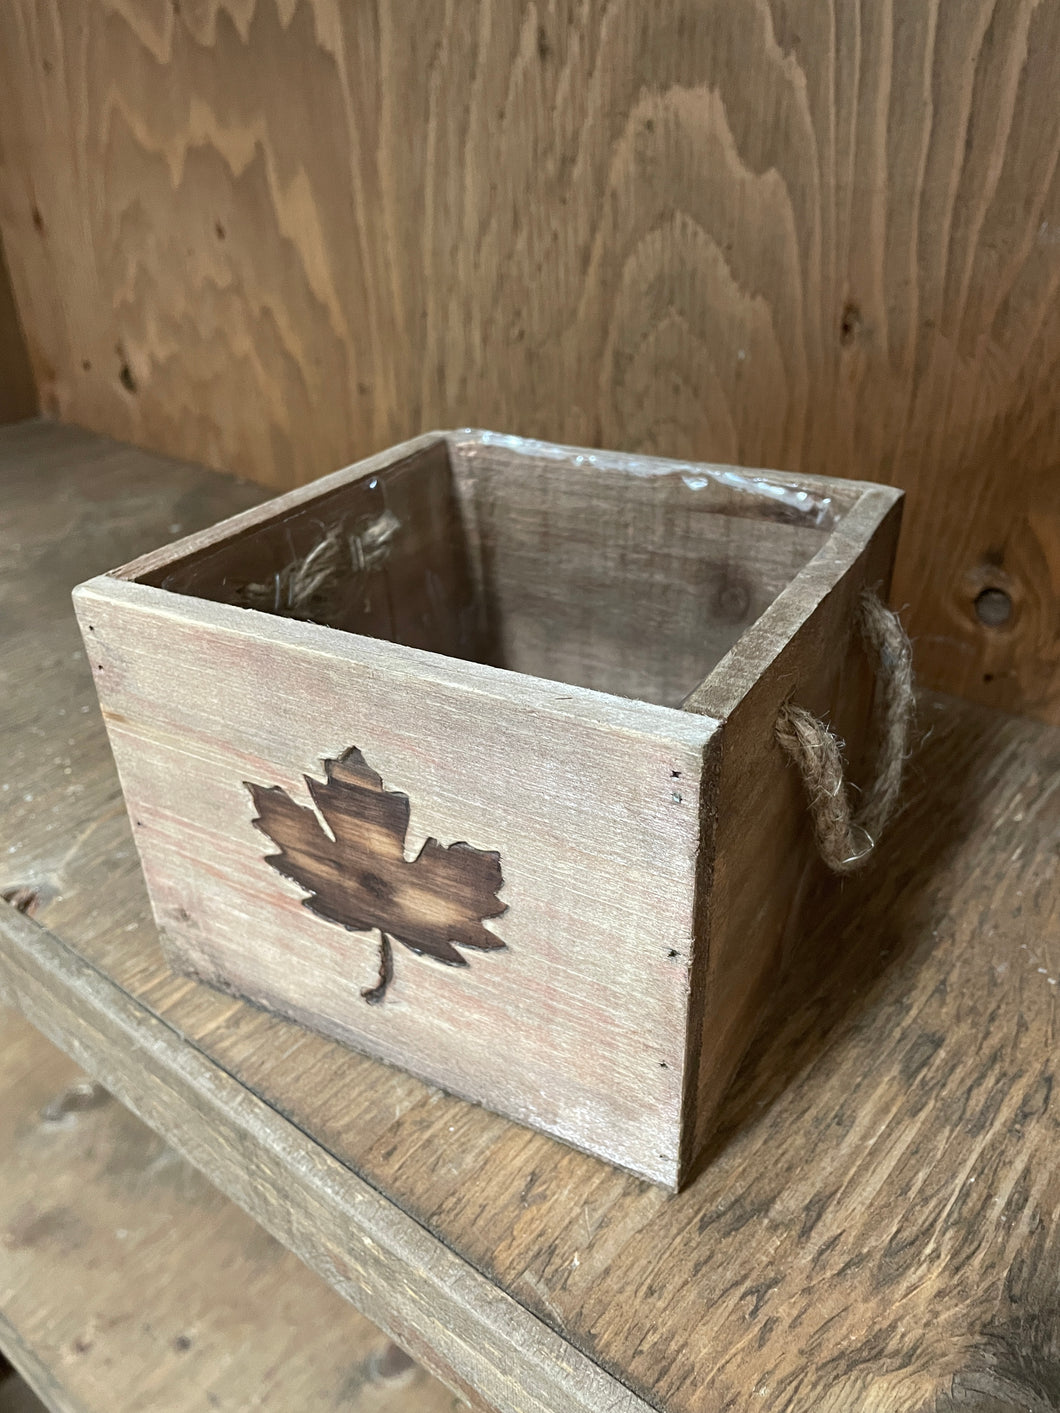 container - wooden - burnt maple leaf design - handles/liner - 5.63x5.63x4.45